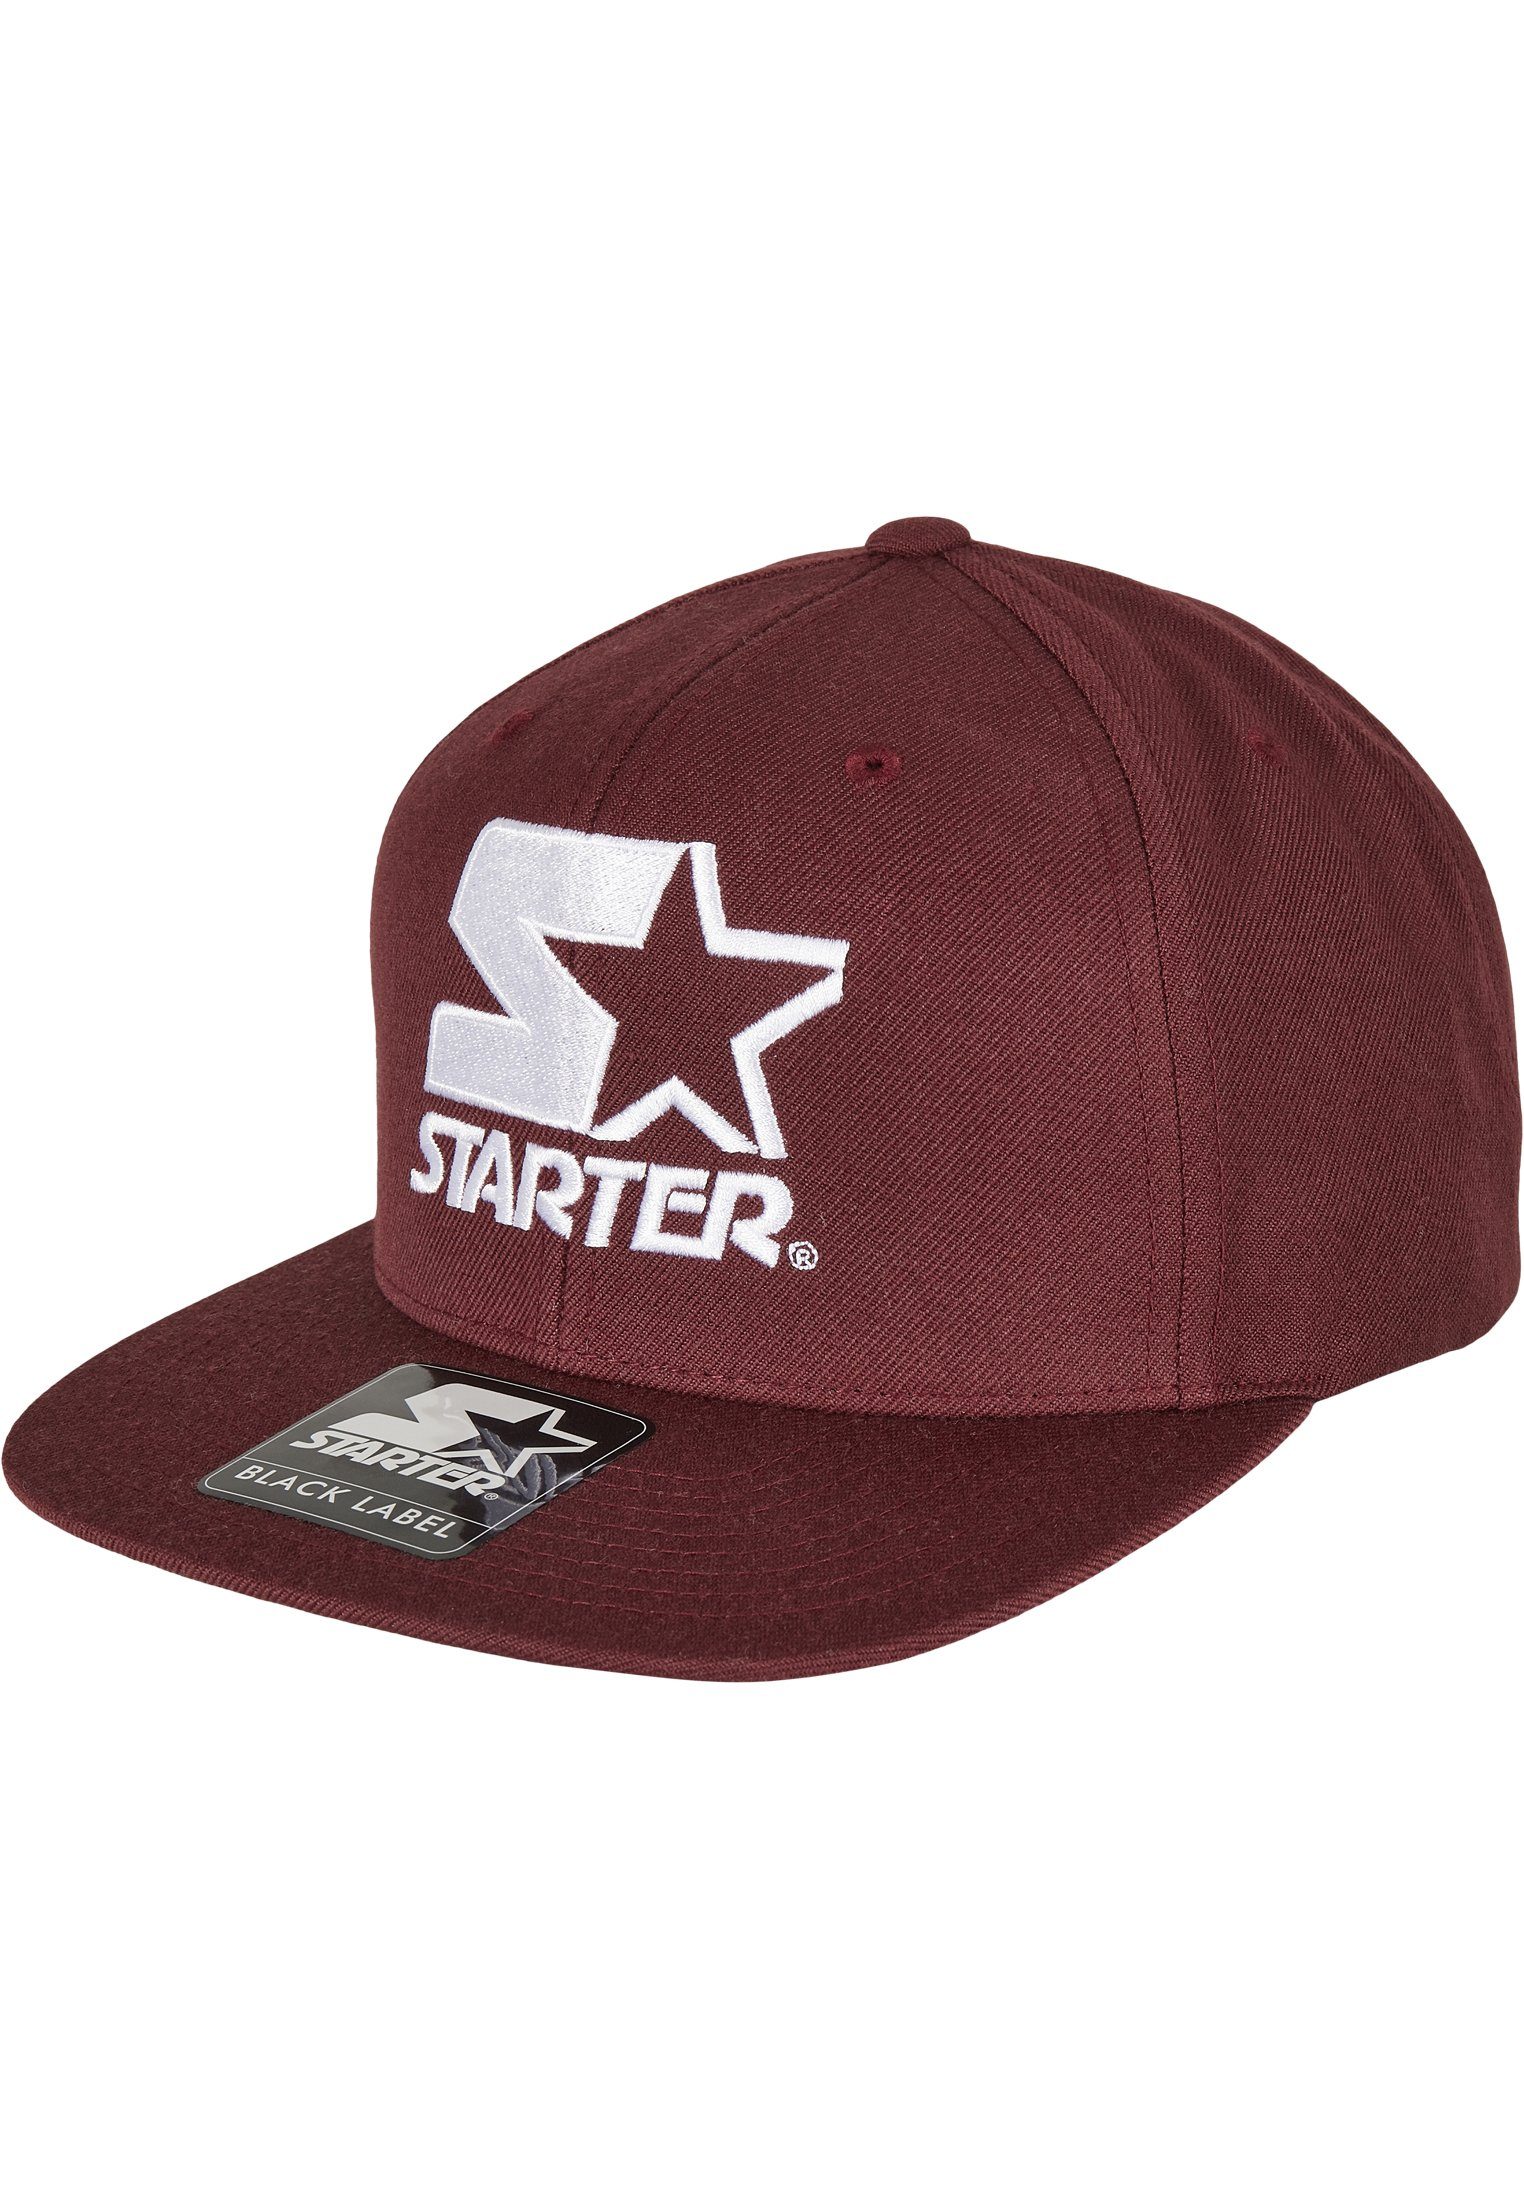 Starter Starter Label Snapback Flex Accessoires port Cap Black Logo